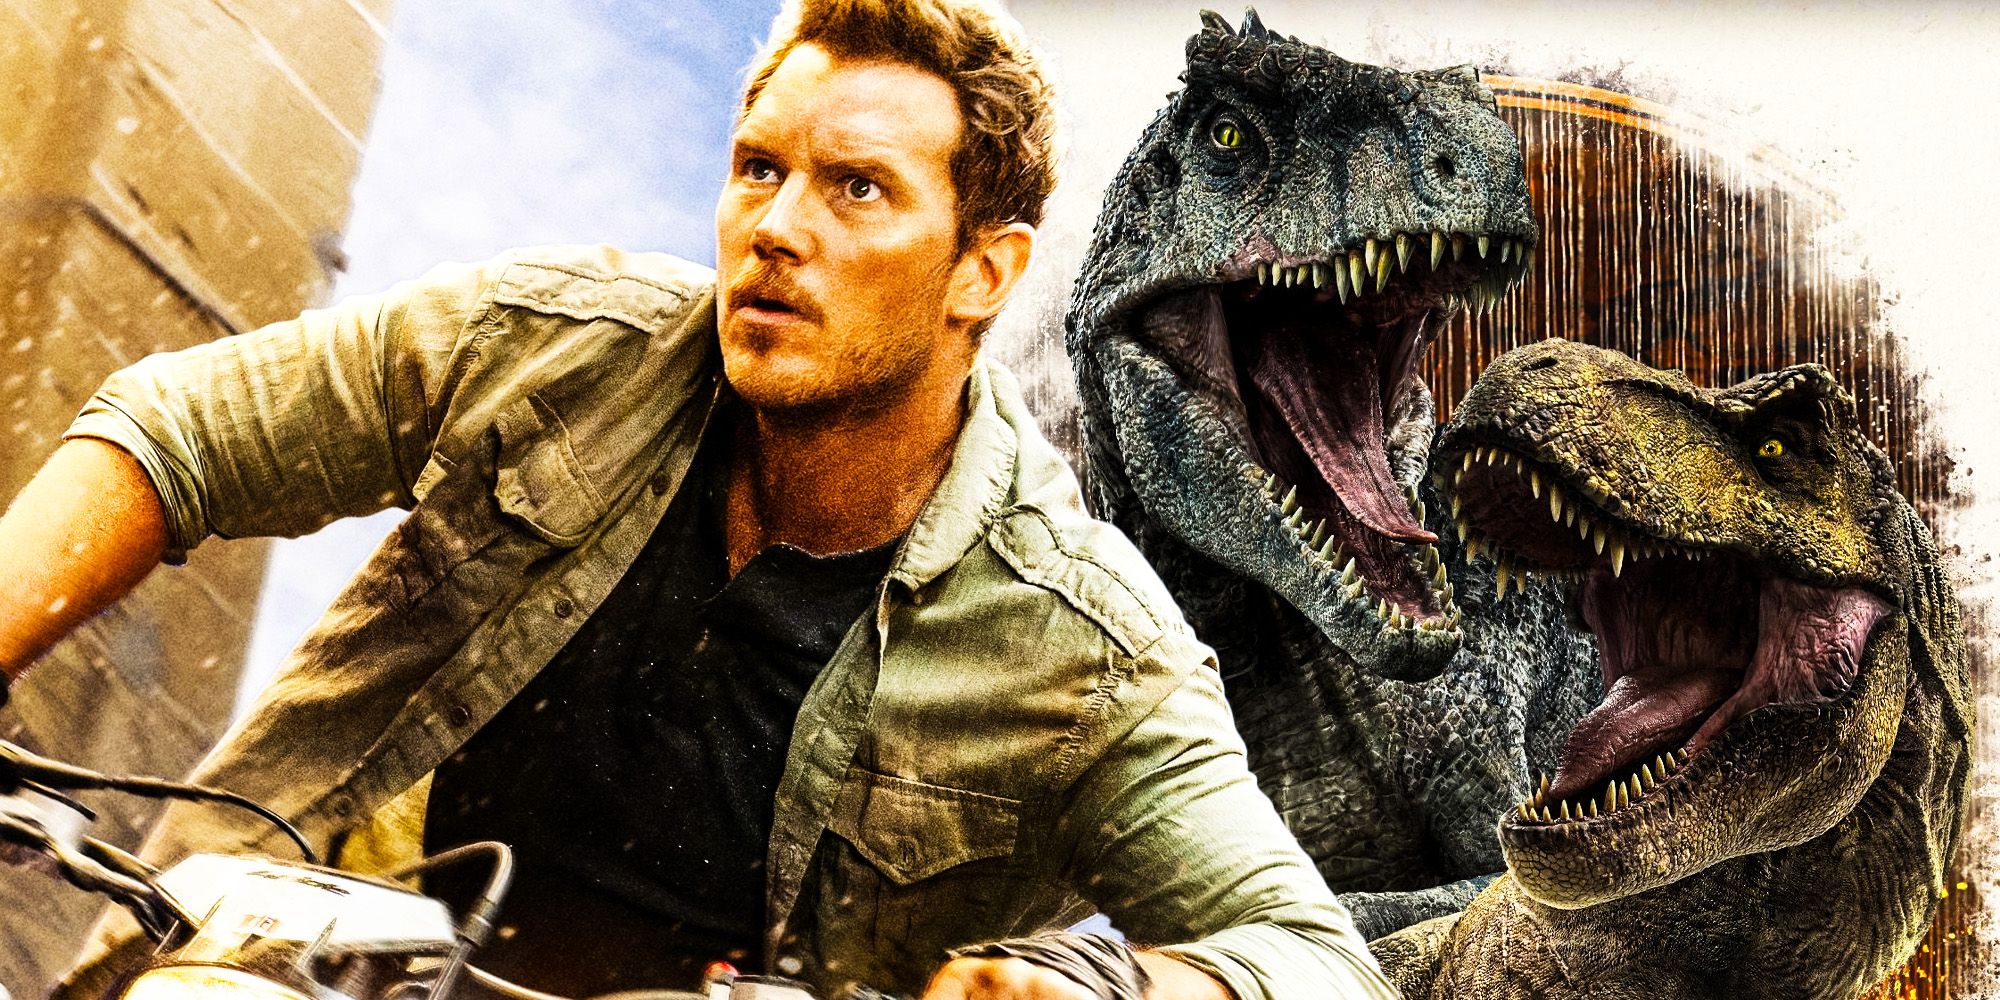 Jurassic world Dominion completes jurassic worlds T Rex insult